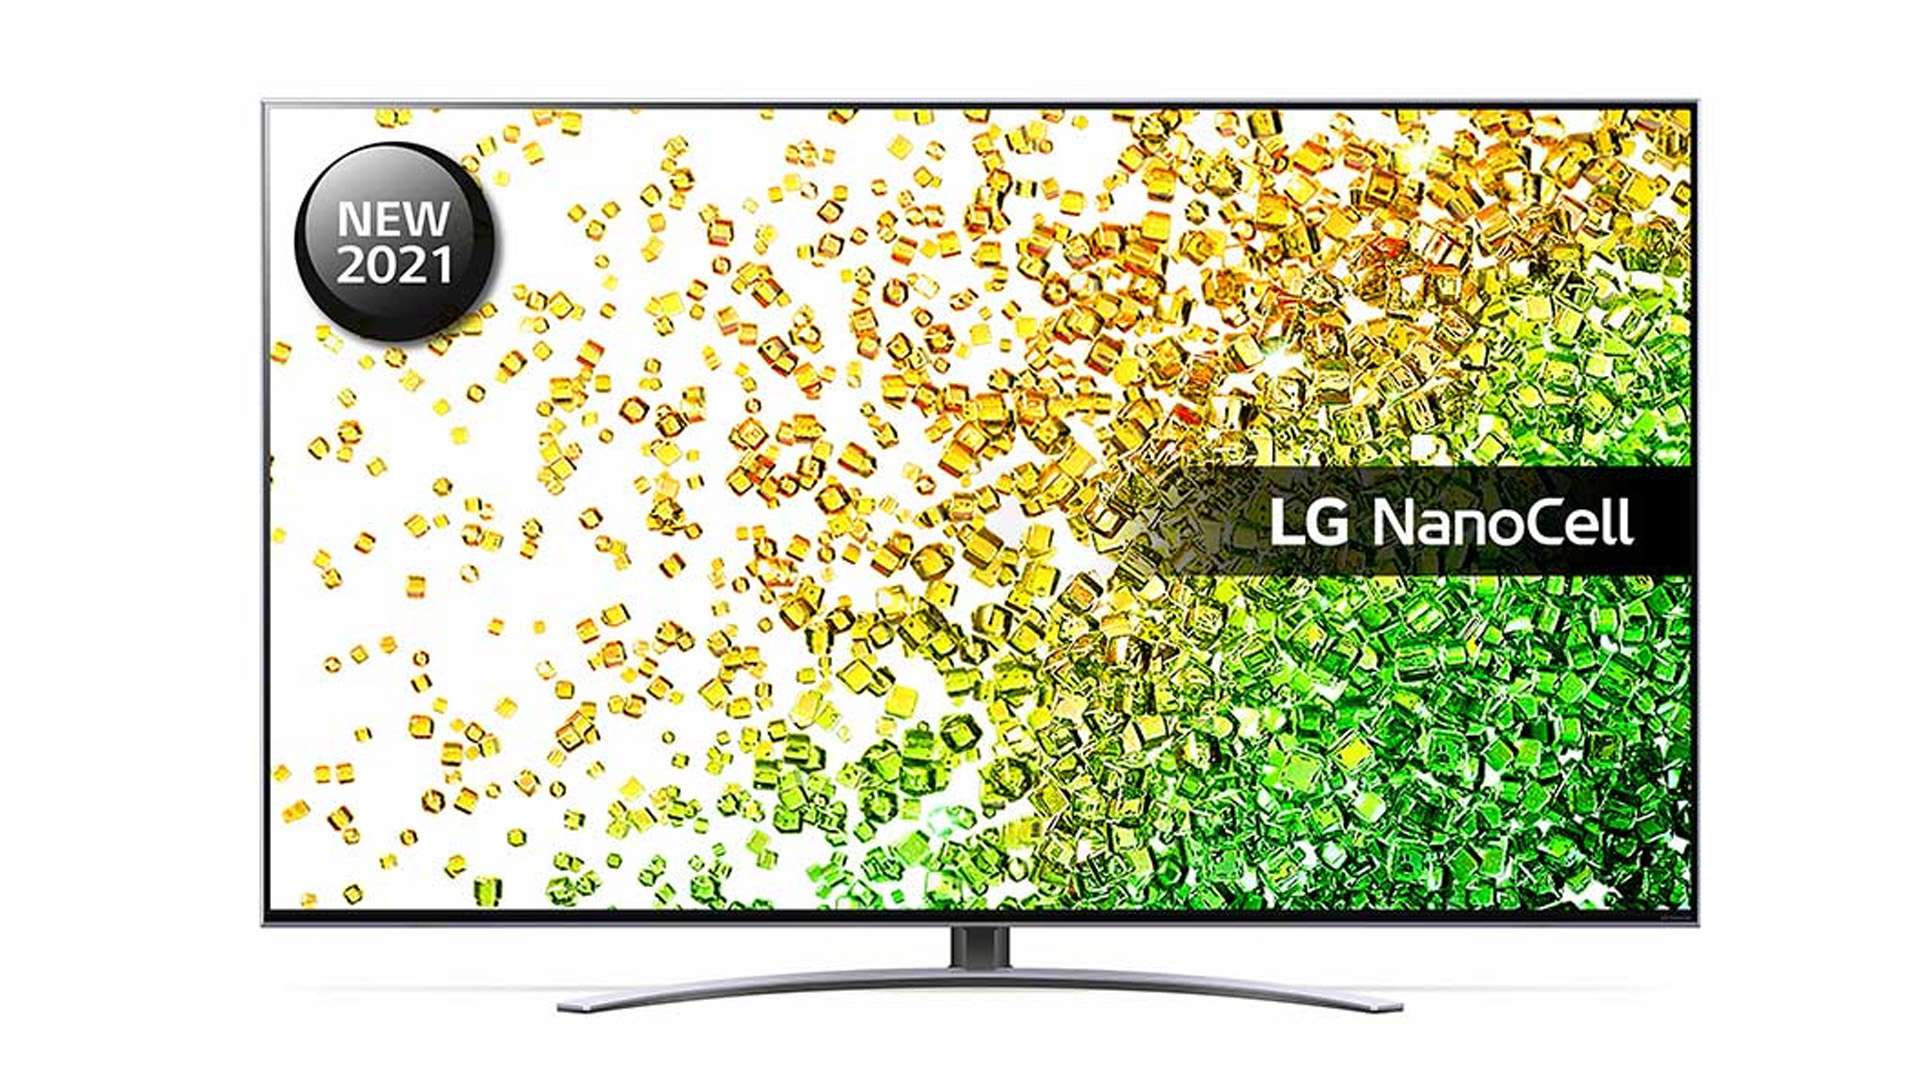 LG NanoCell TV